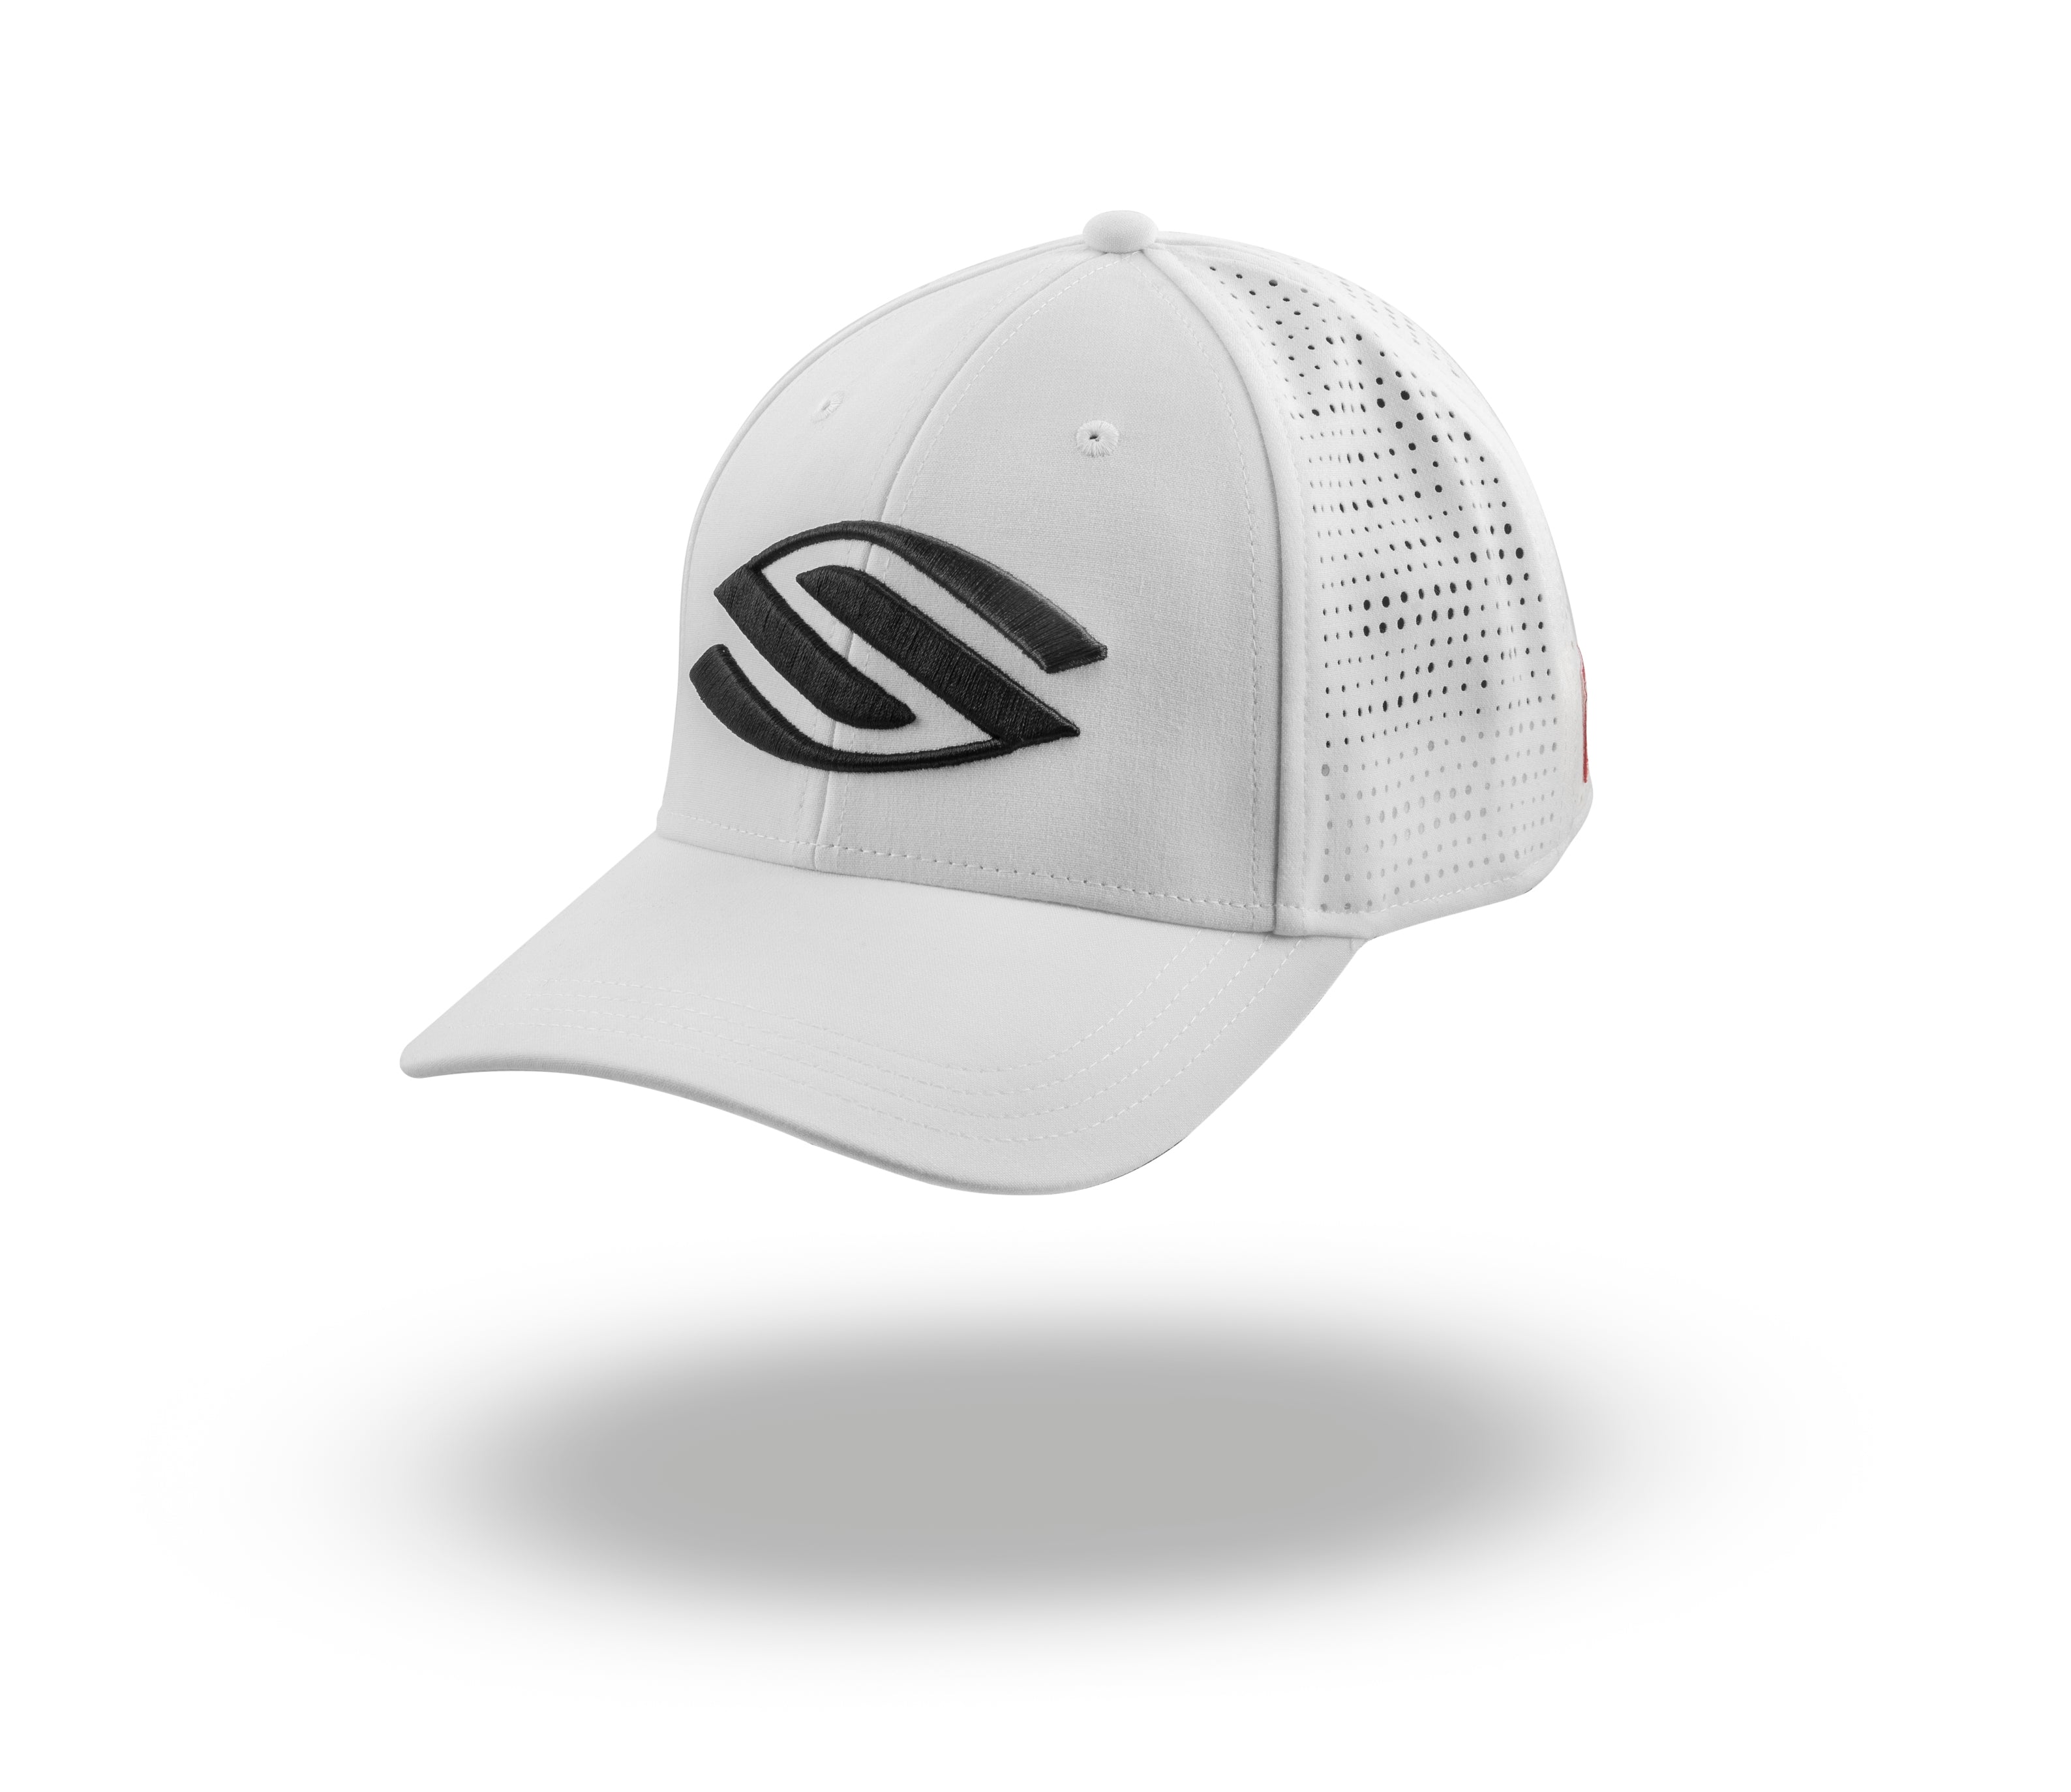 White Selkirk Premium Epic Performance Hat - Lightweight